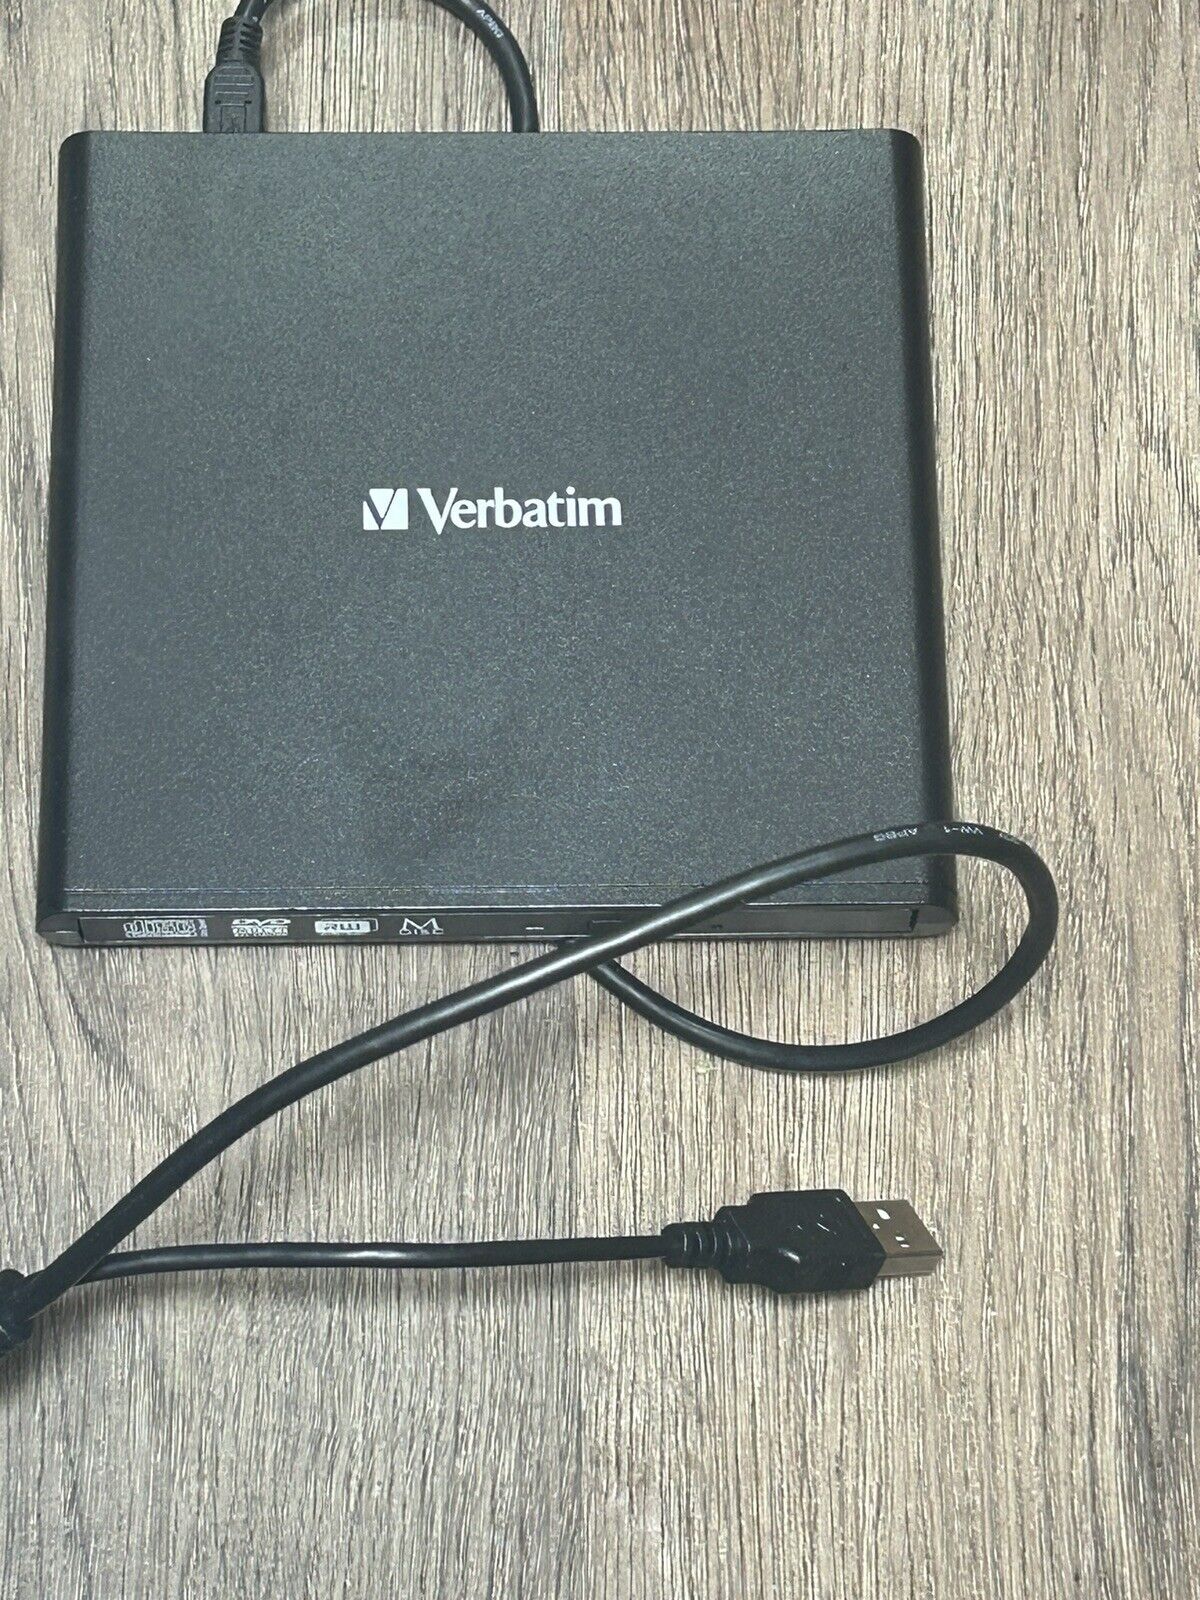 Verbatim 98938 External Slimline CD/DVD Writer USB 2.0 Black USB Cable Included